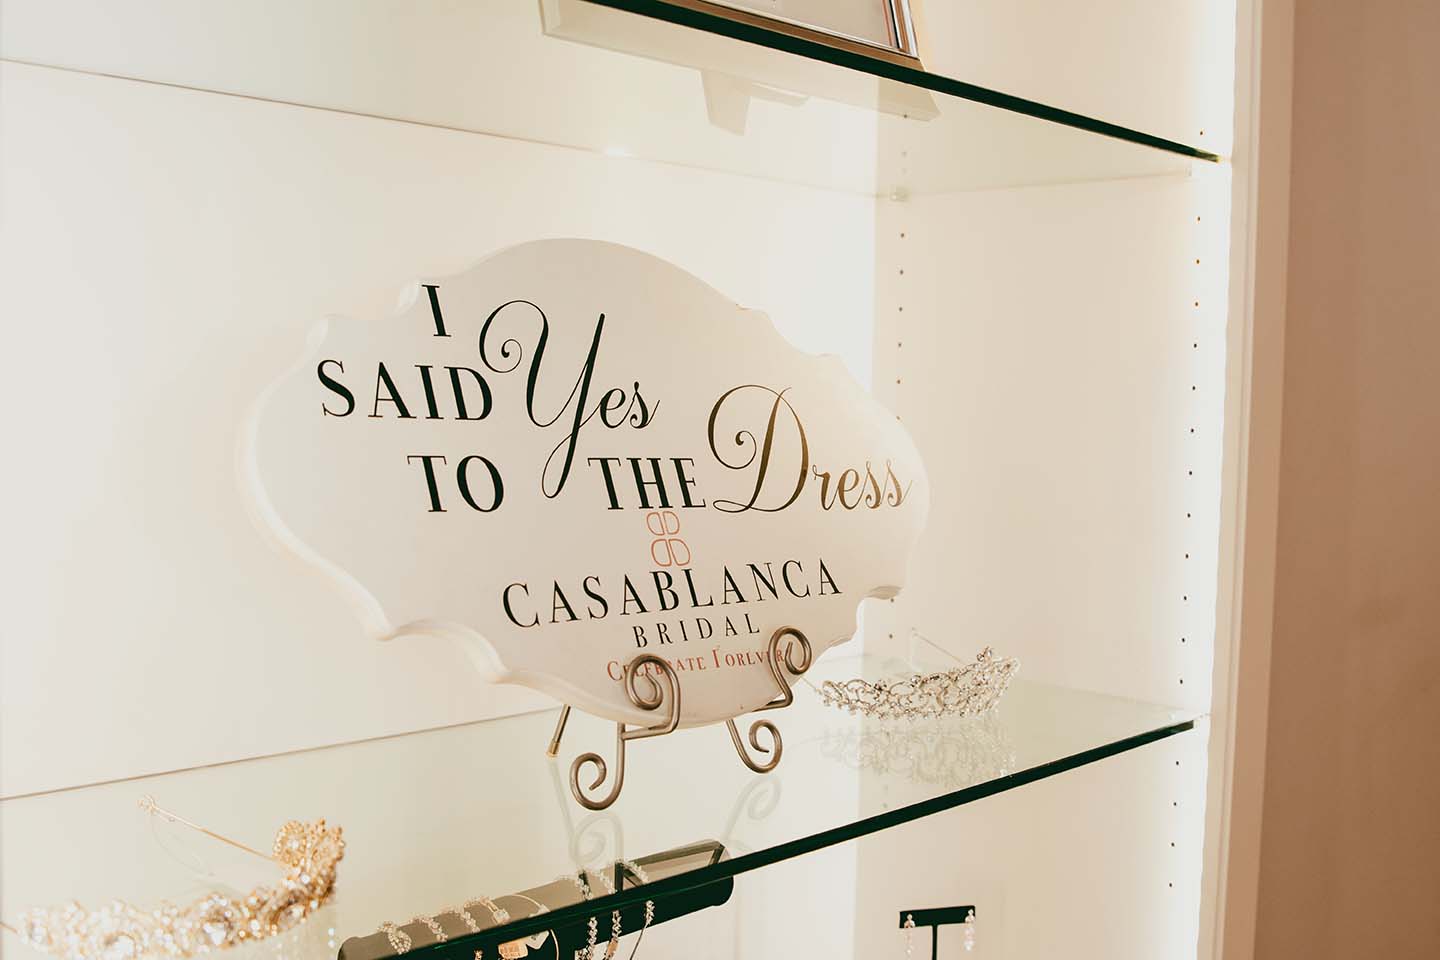 I SAID Yes TO THE Dress. Casablanca Bridal